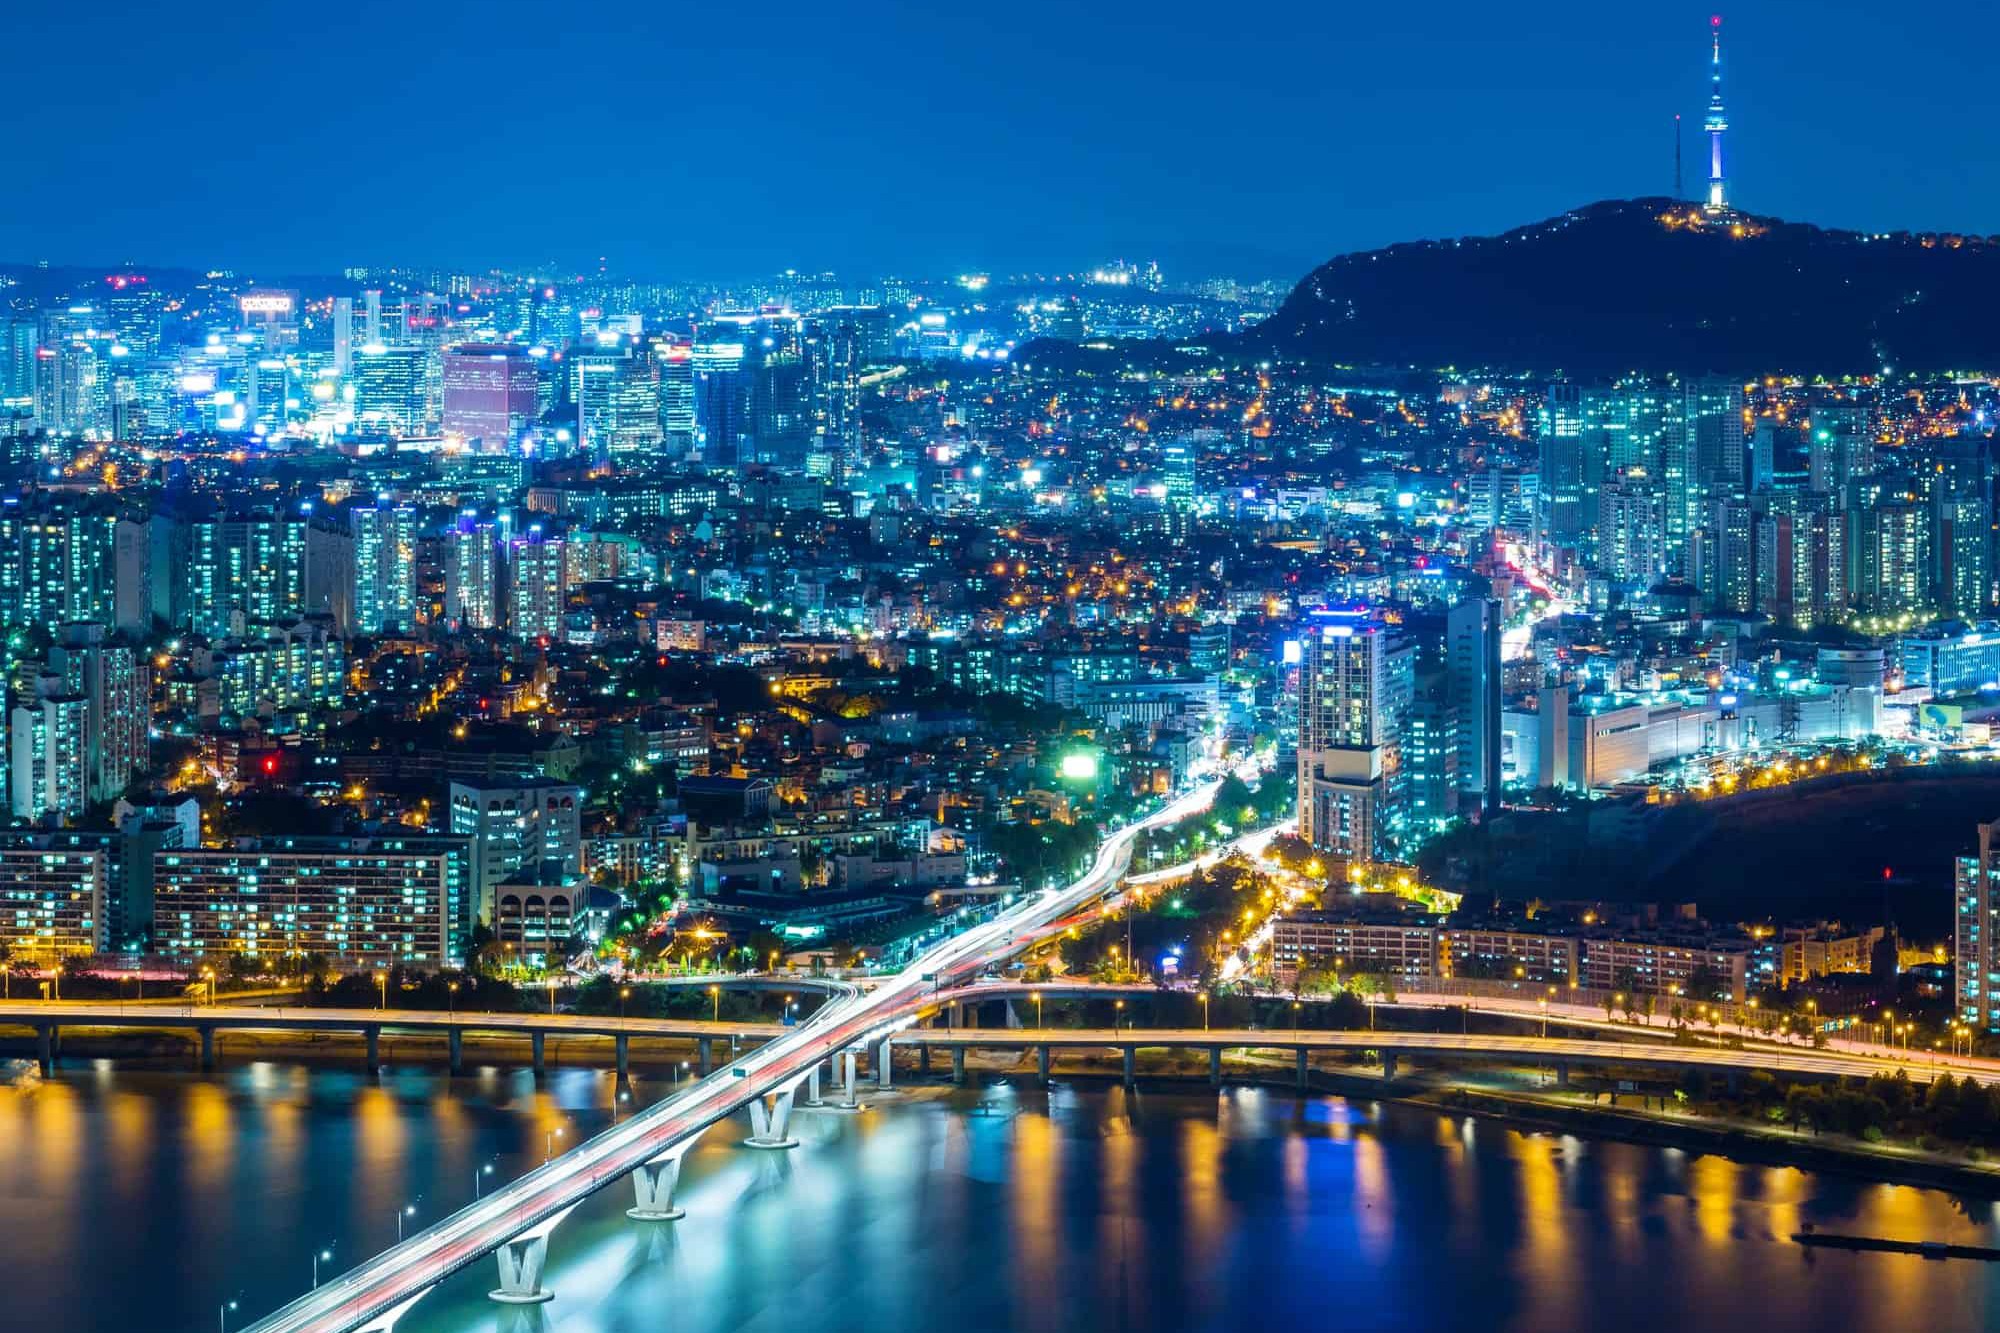 Seoul, South Korea skyline at night